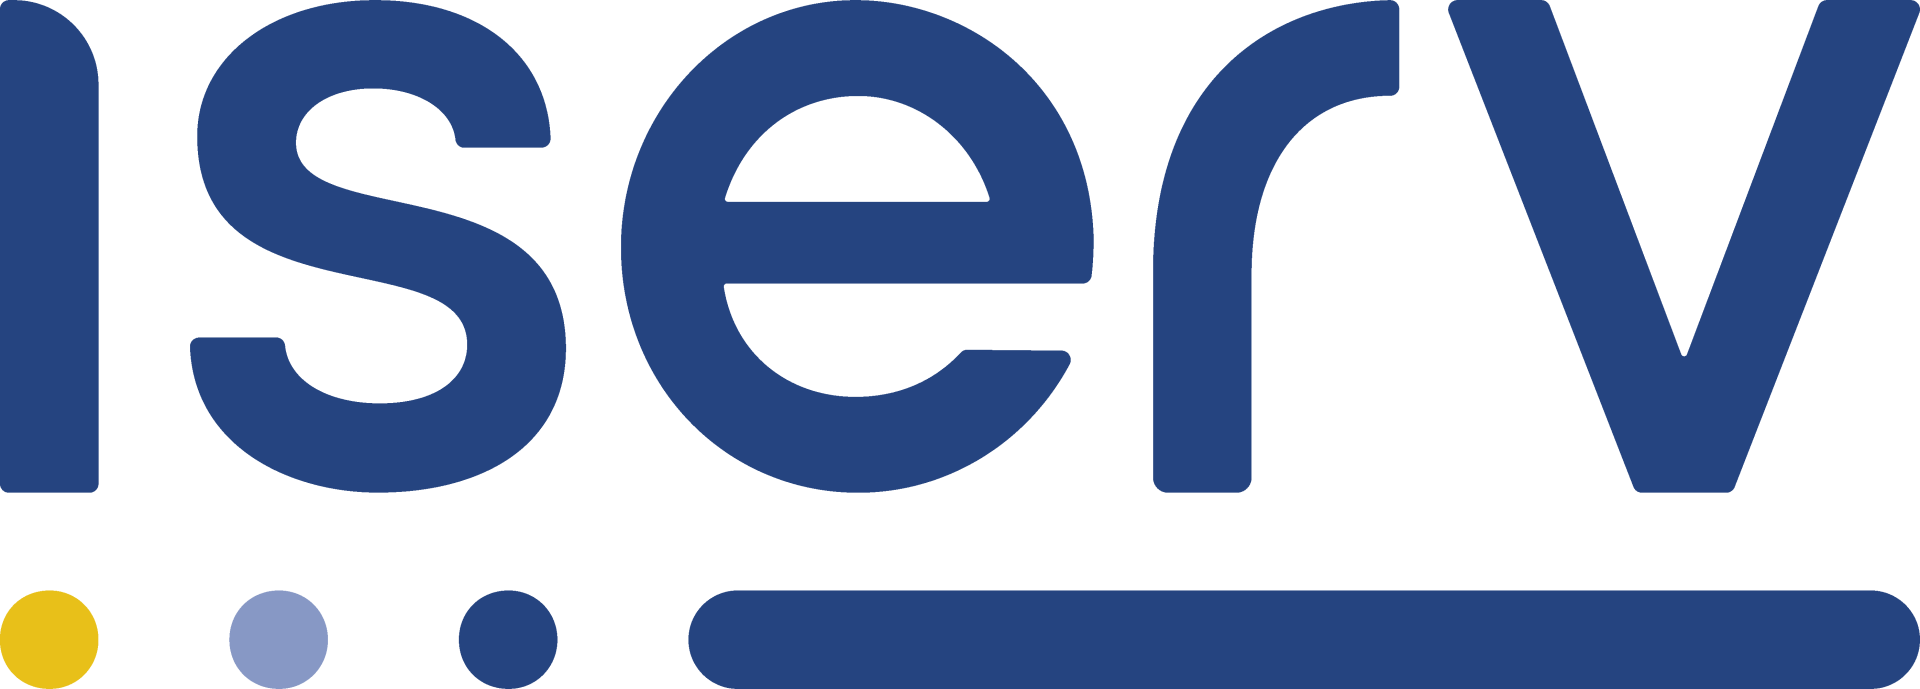 Iserv logo